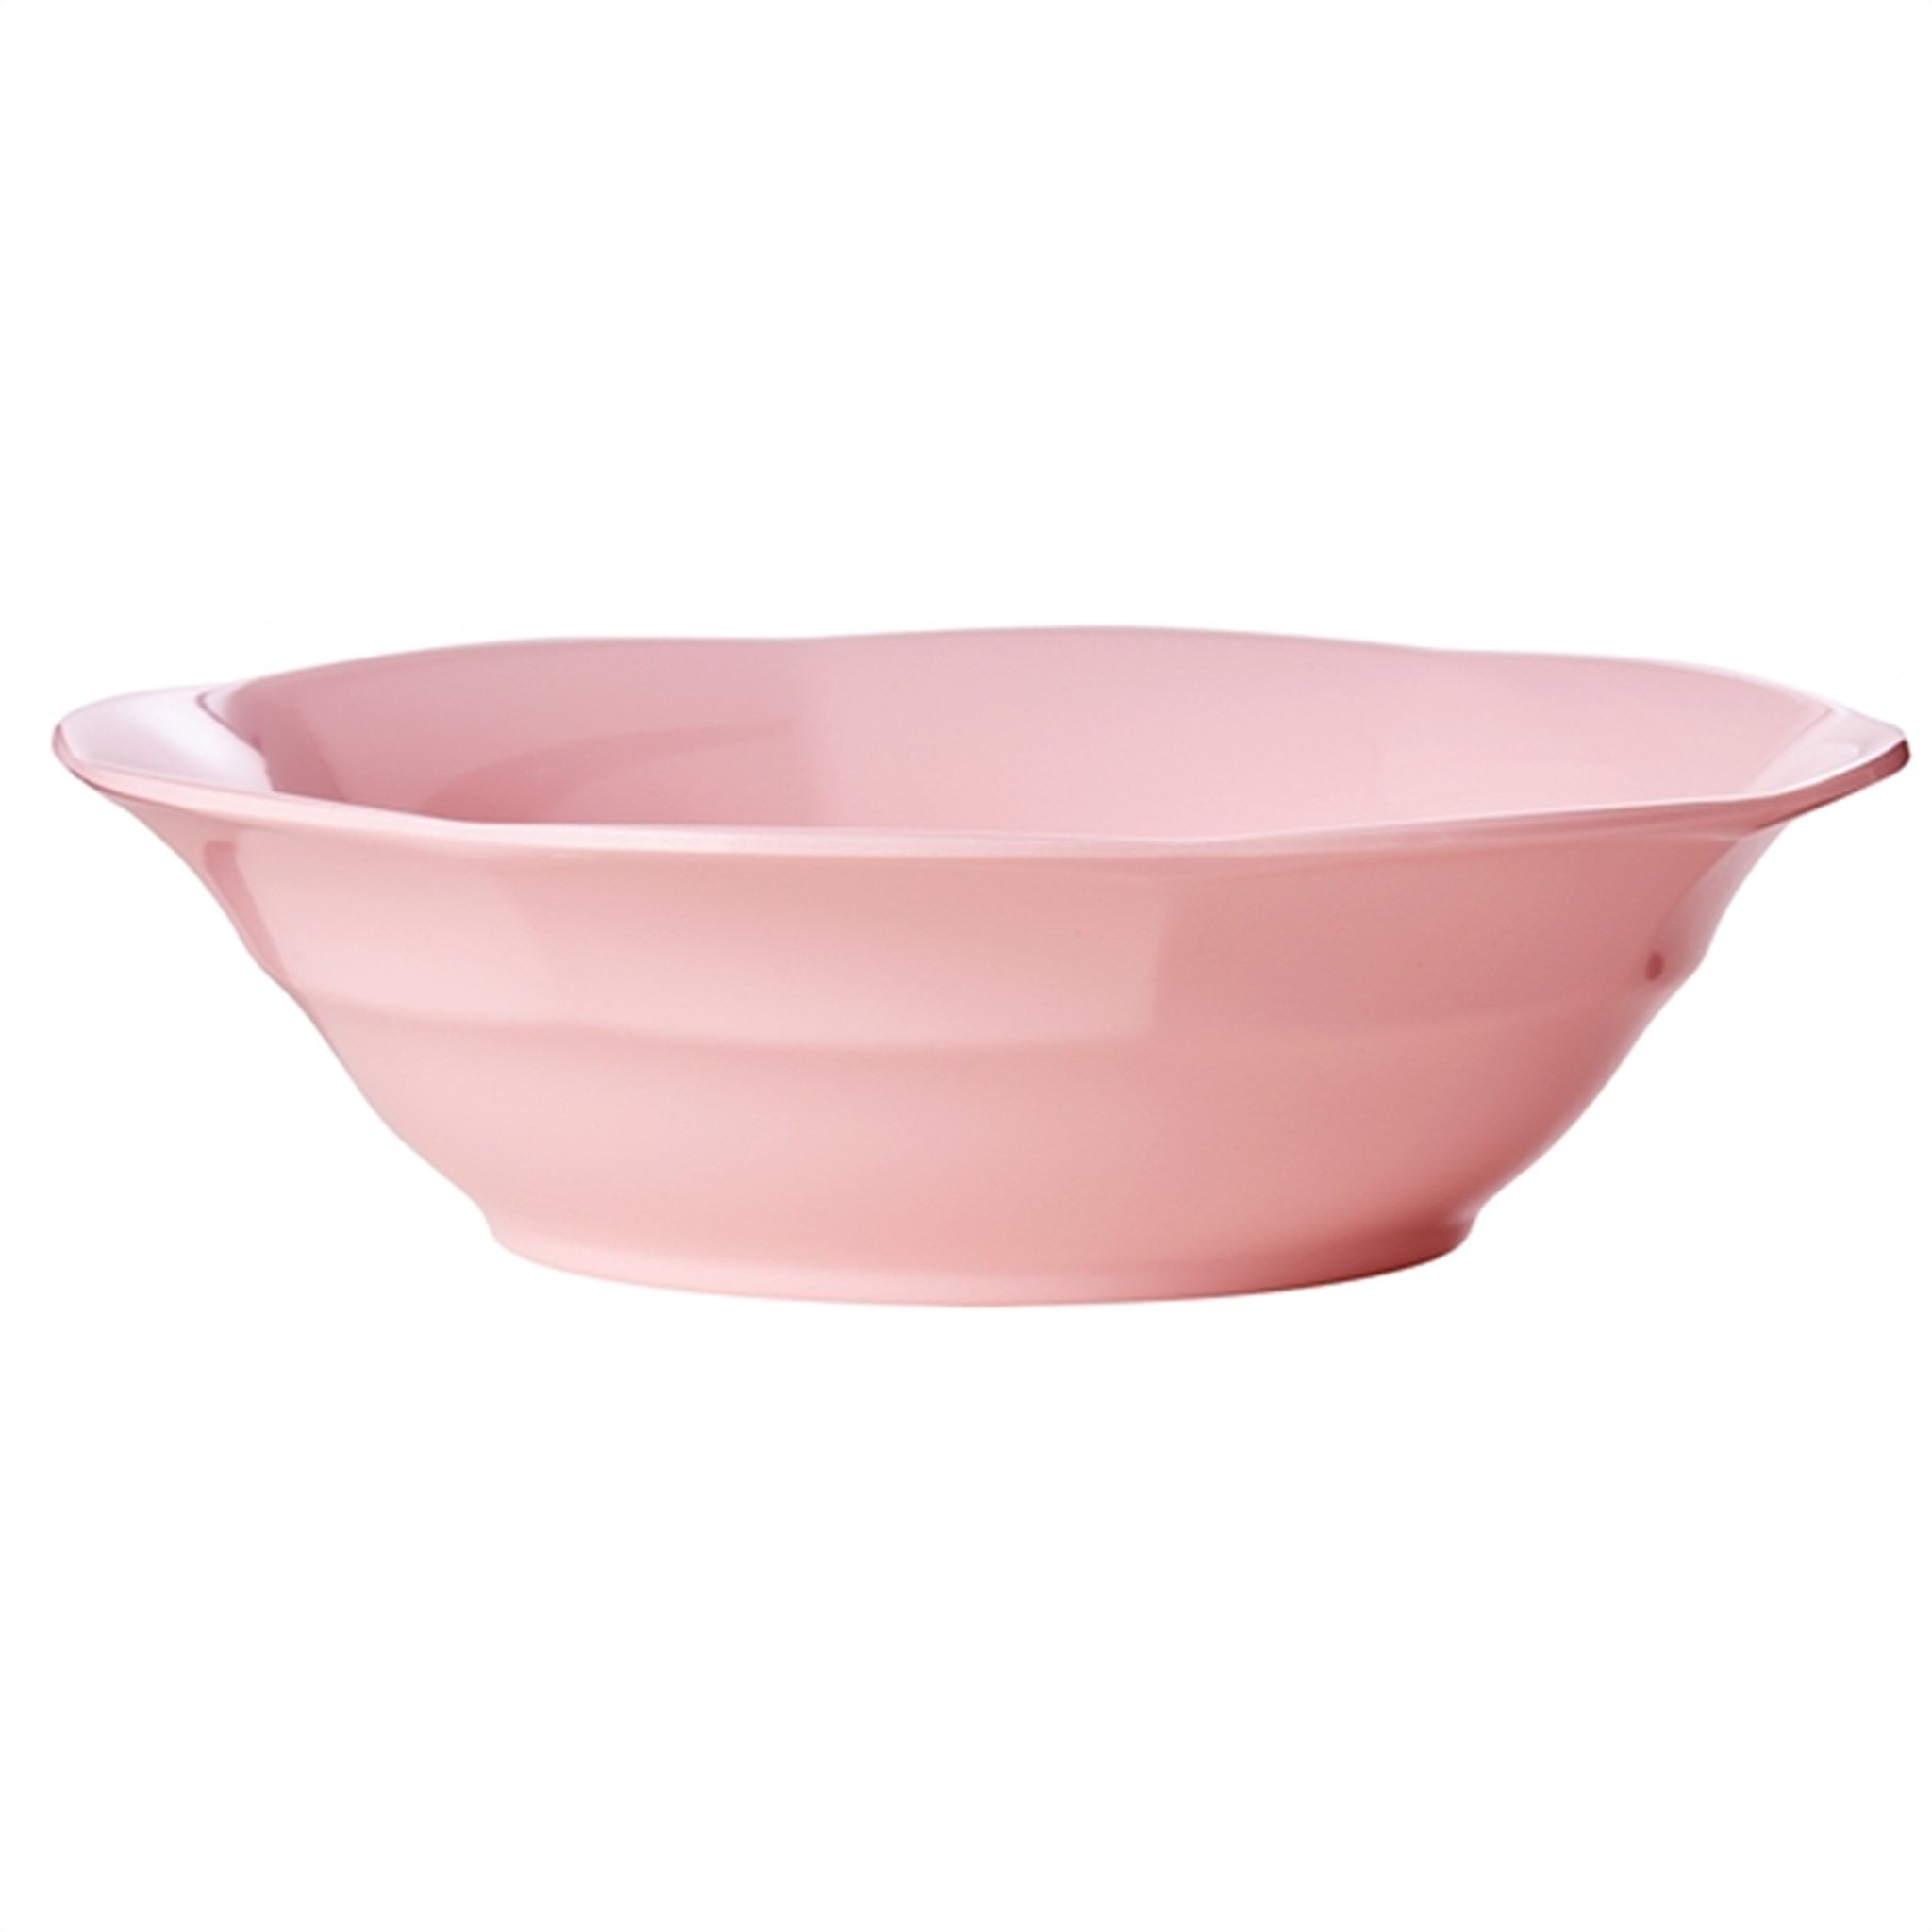 RICE Soft Pink Melamine Soup Bowl